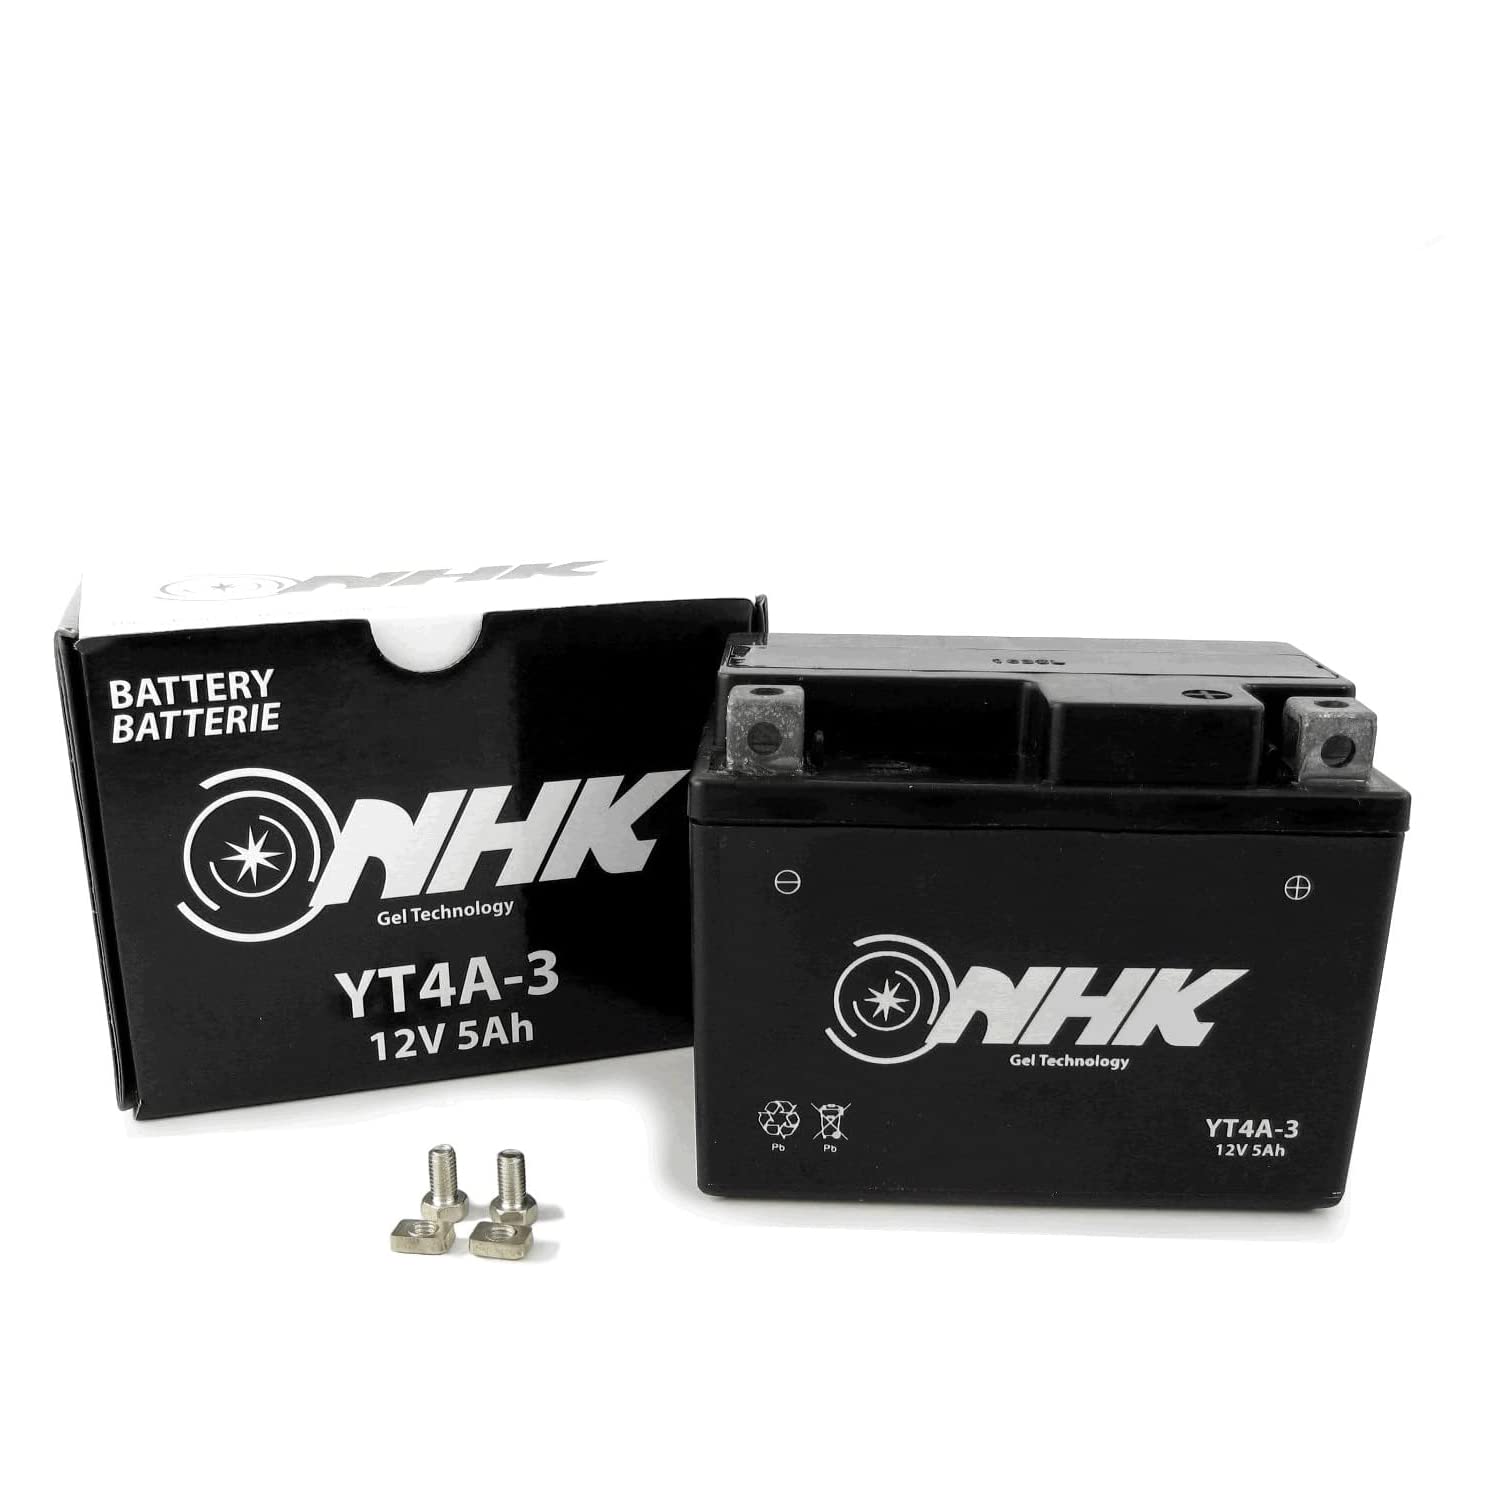 Wartungsfreie Gel Batterie 5Ah kompatibel mit Yamaha BWs 50, Yamaha Jog 50, Yamaha Slider 50 (YT4A-3) von Area1